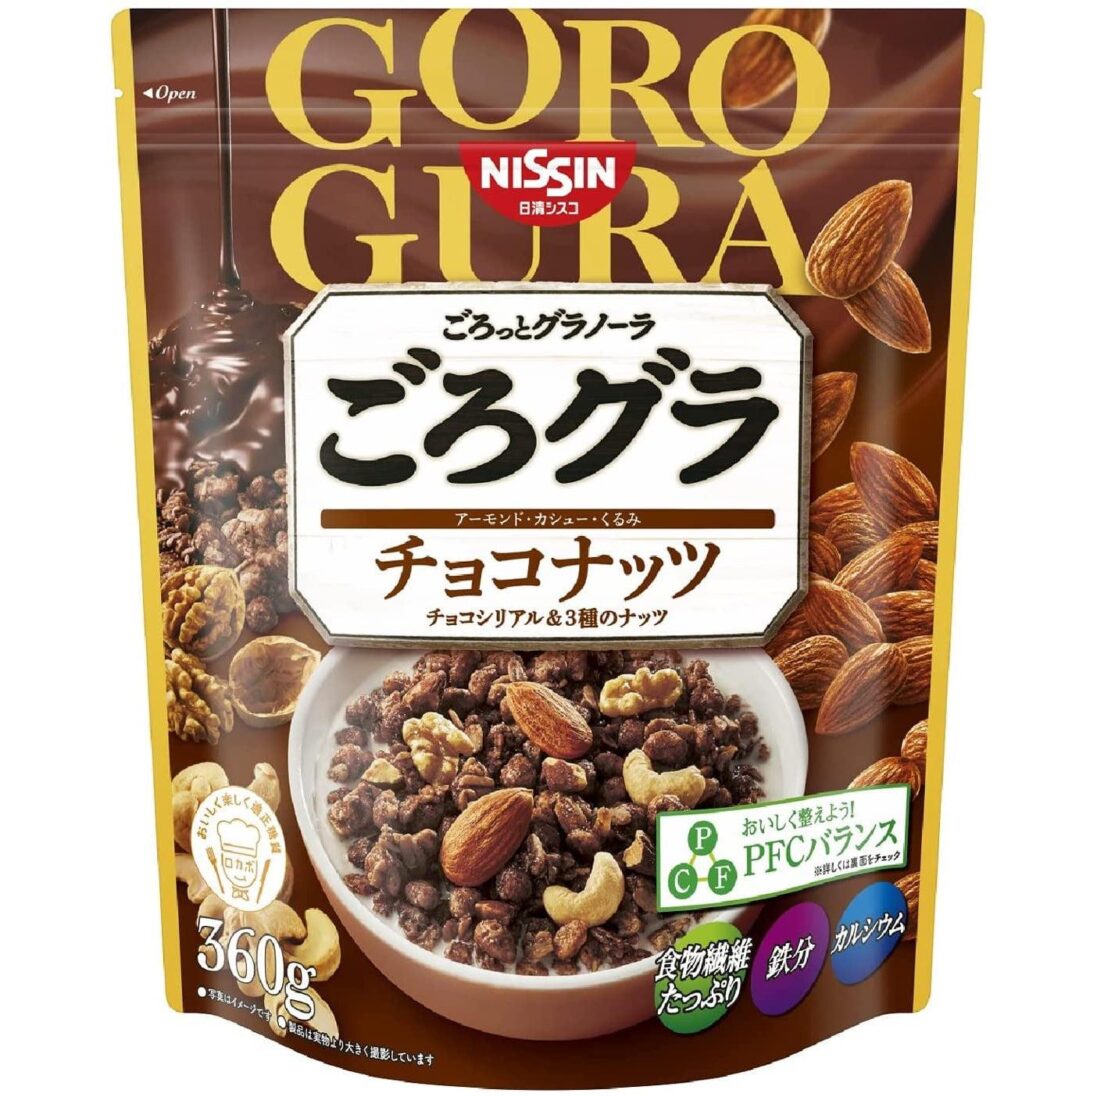 Nissin Gorogura Japanese Granola Cereal Chocolate Nuts 360g